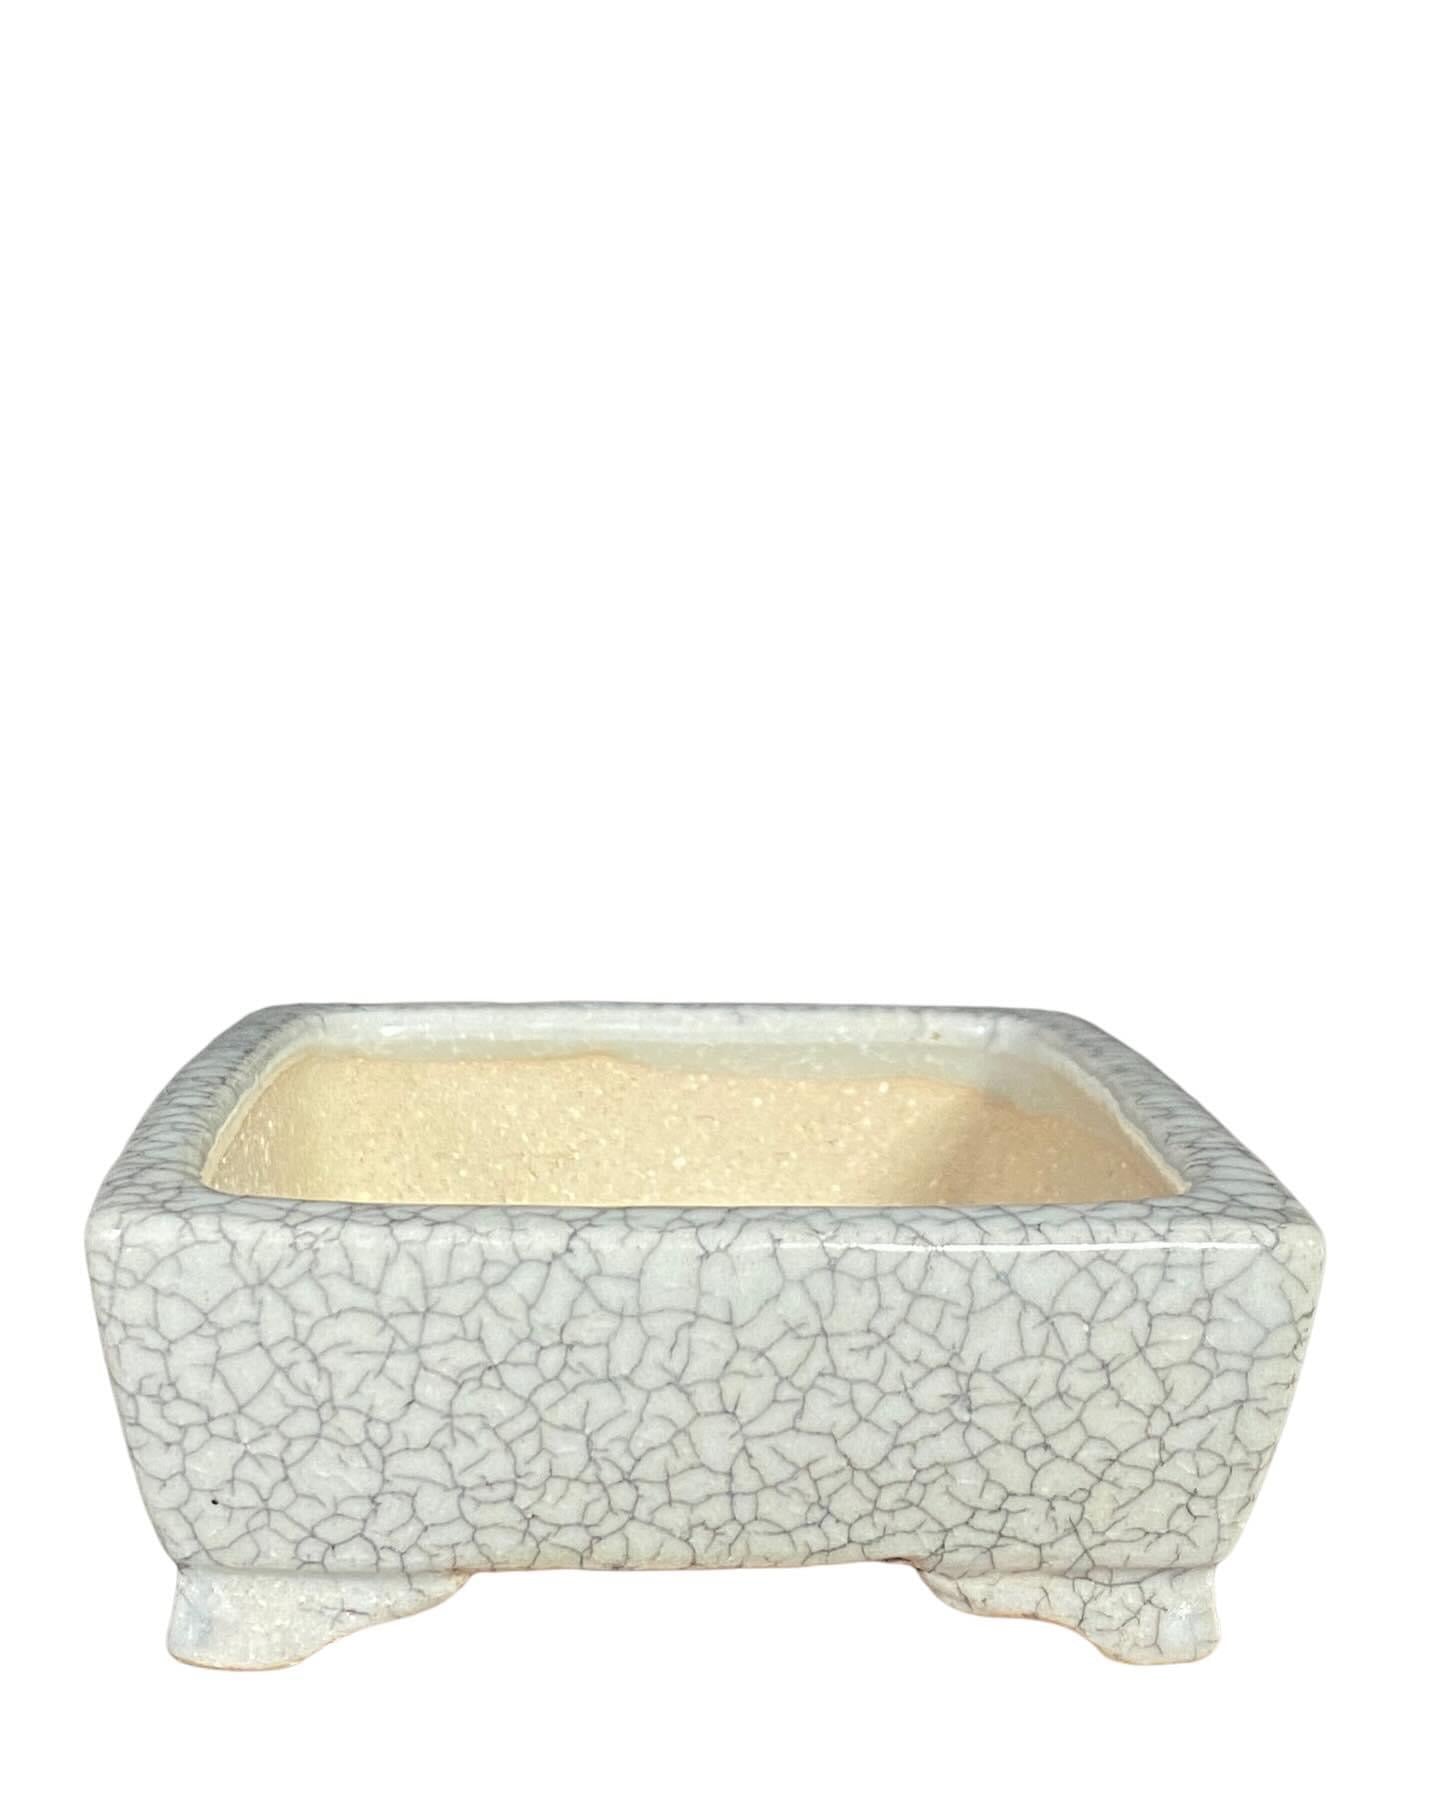 Shibakatsu - White Crackle Glazed Rectangle Style Bonsai Pot (4-15/16” wide)